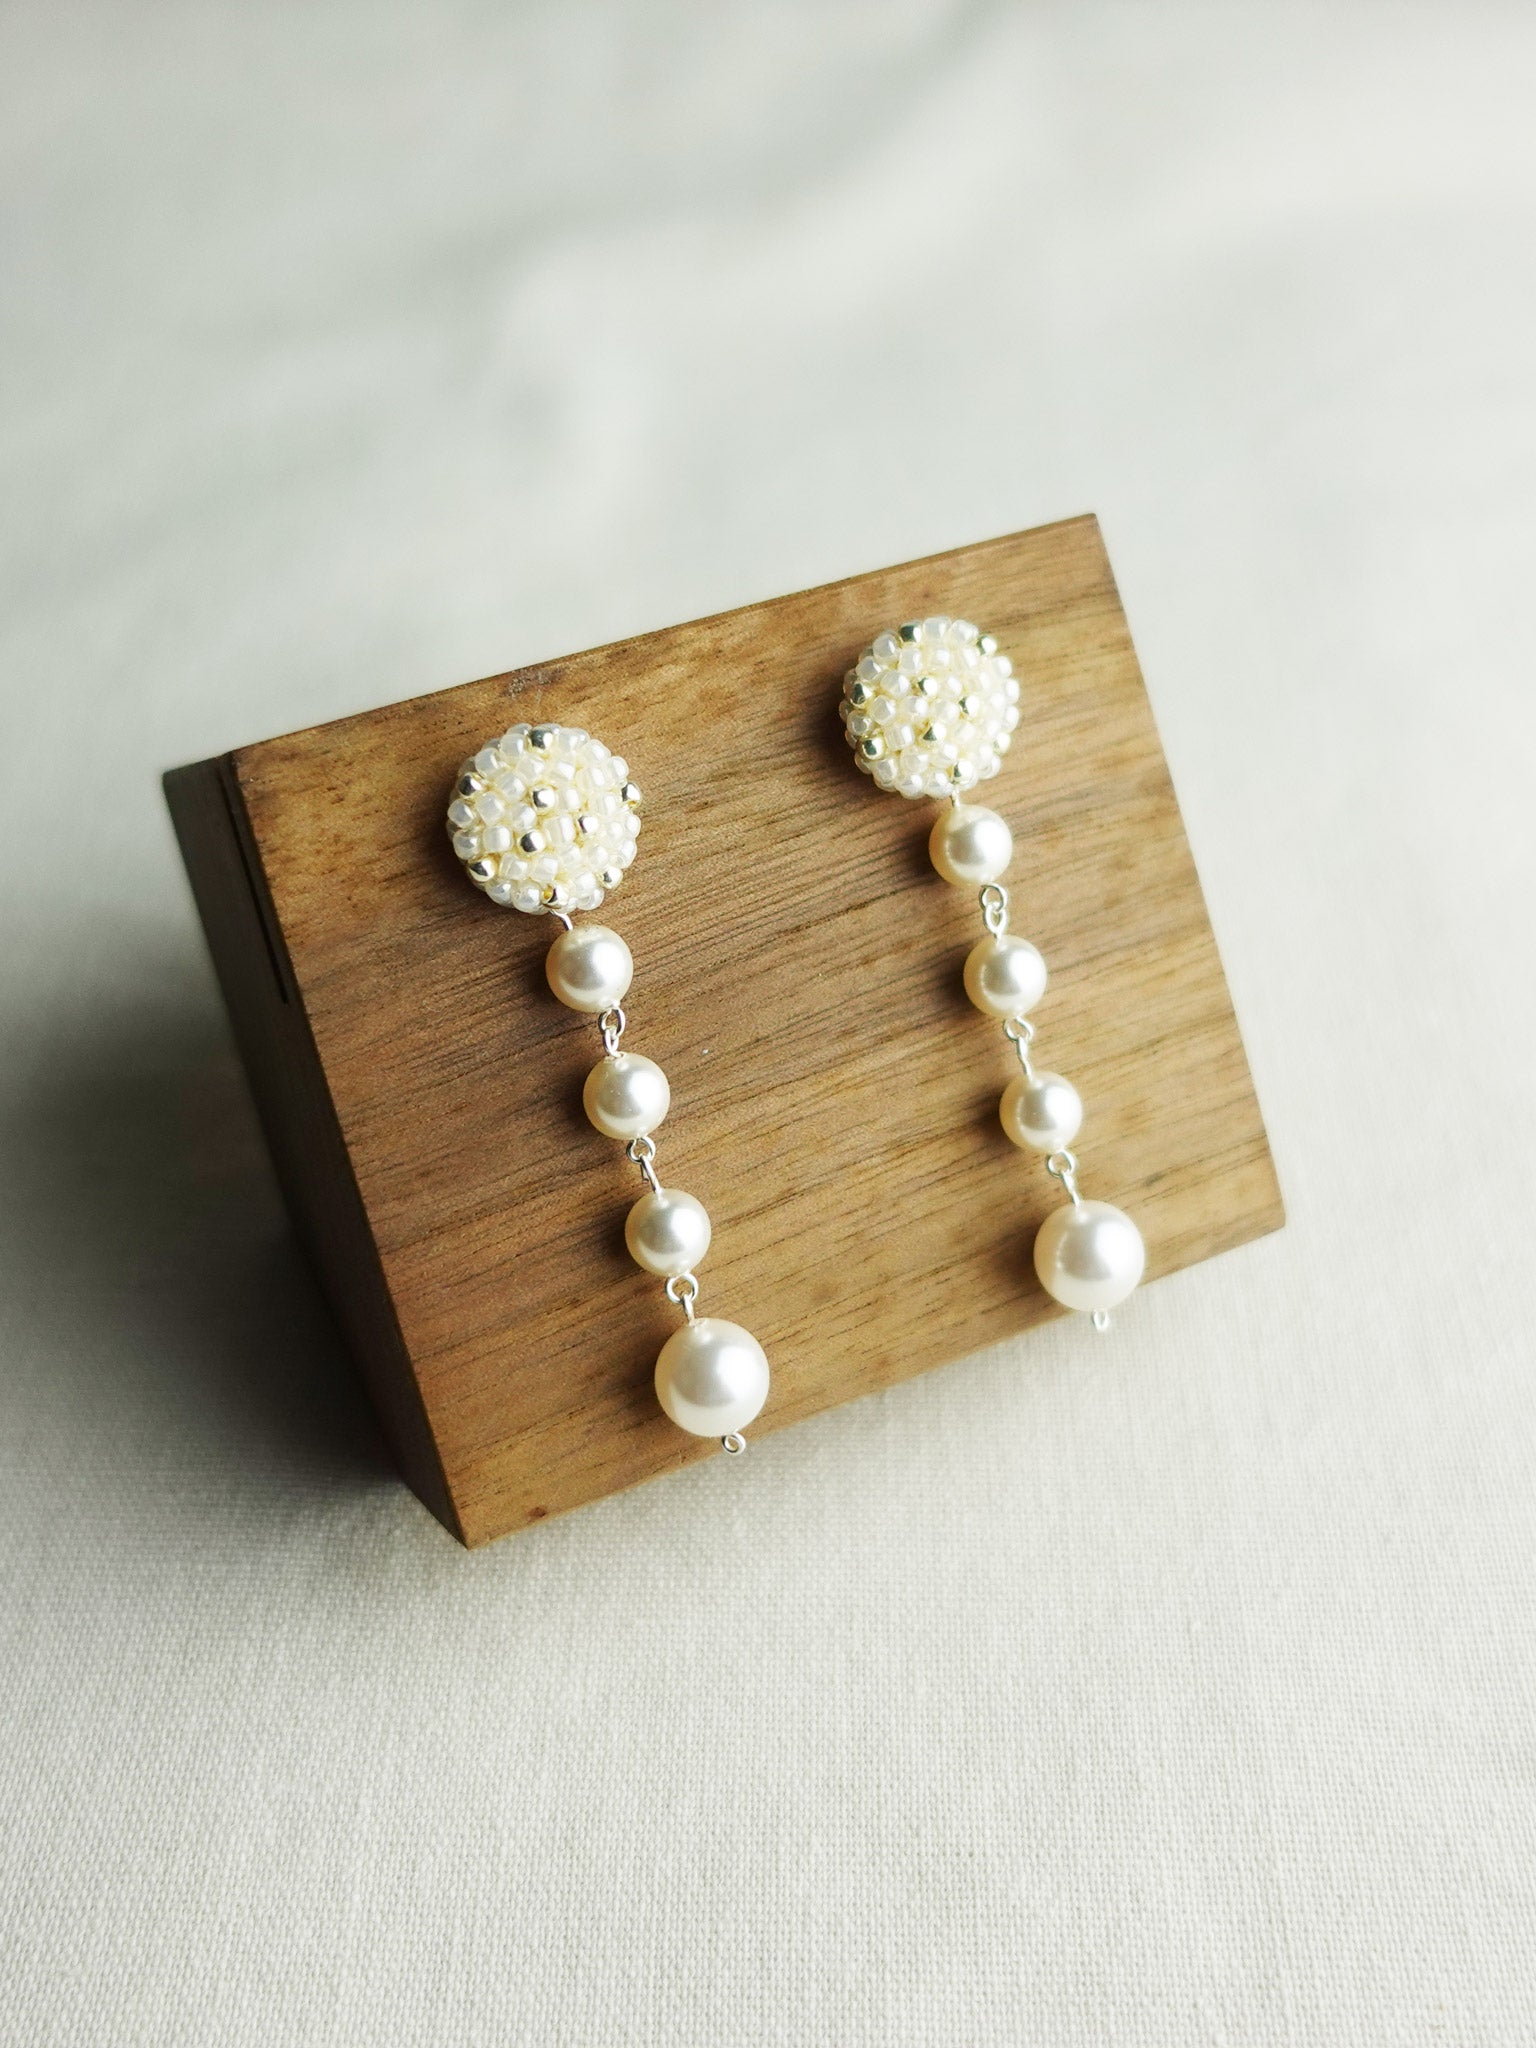 Thea Star Dust Earrings in Ivory Display